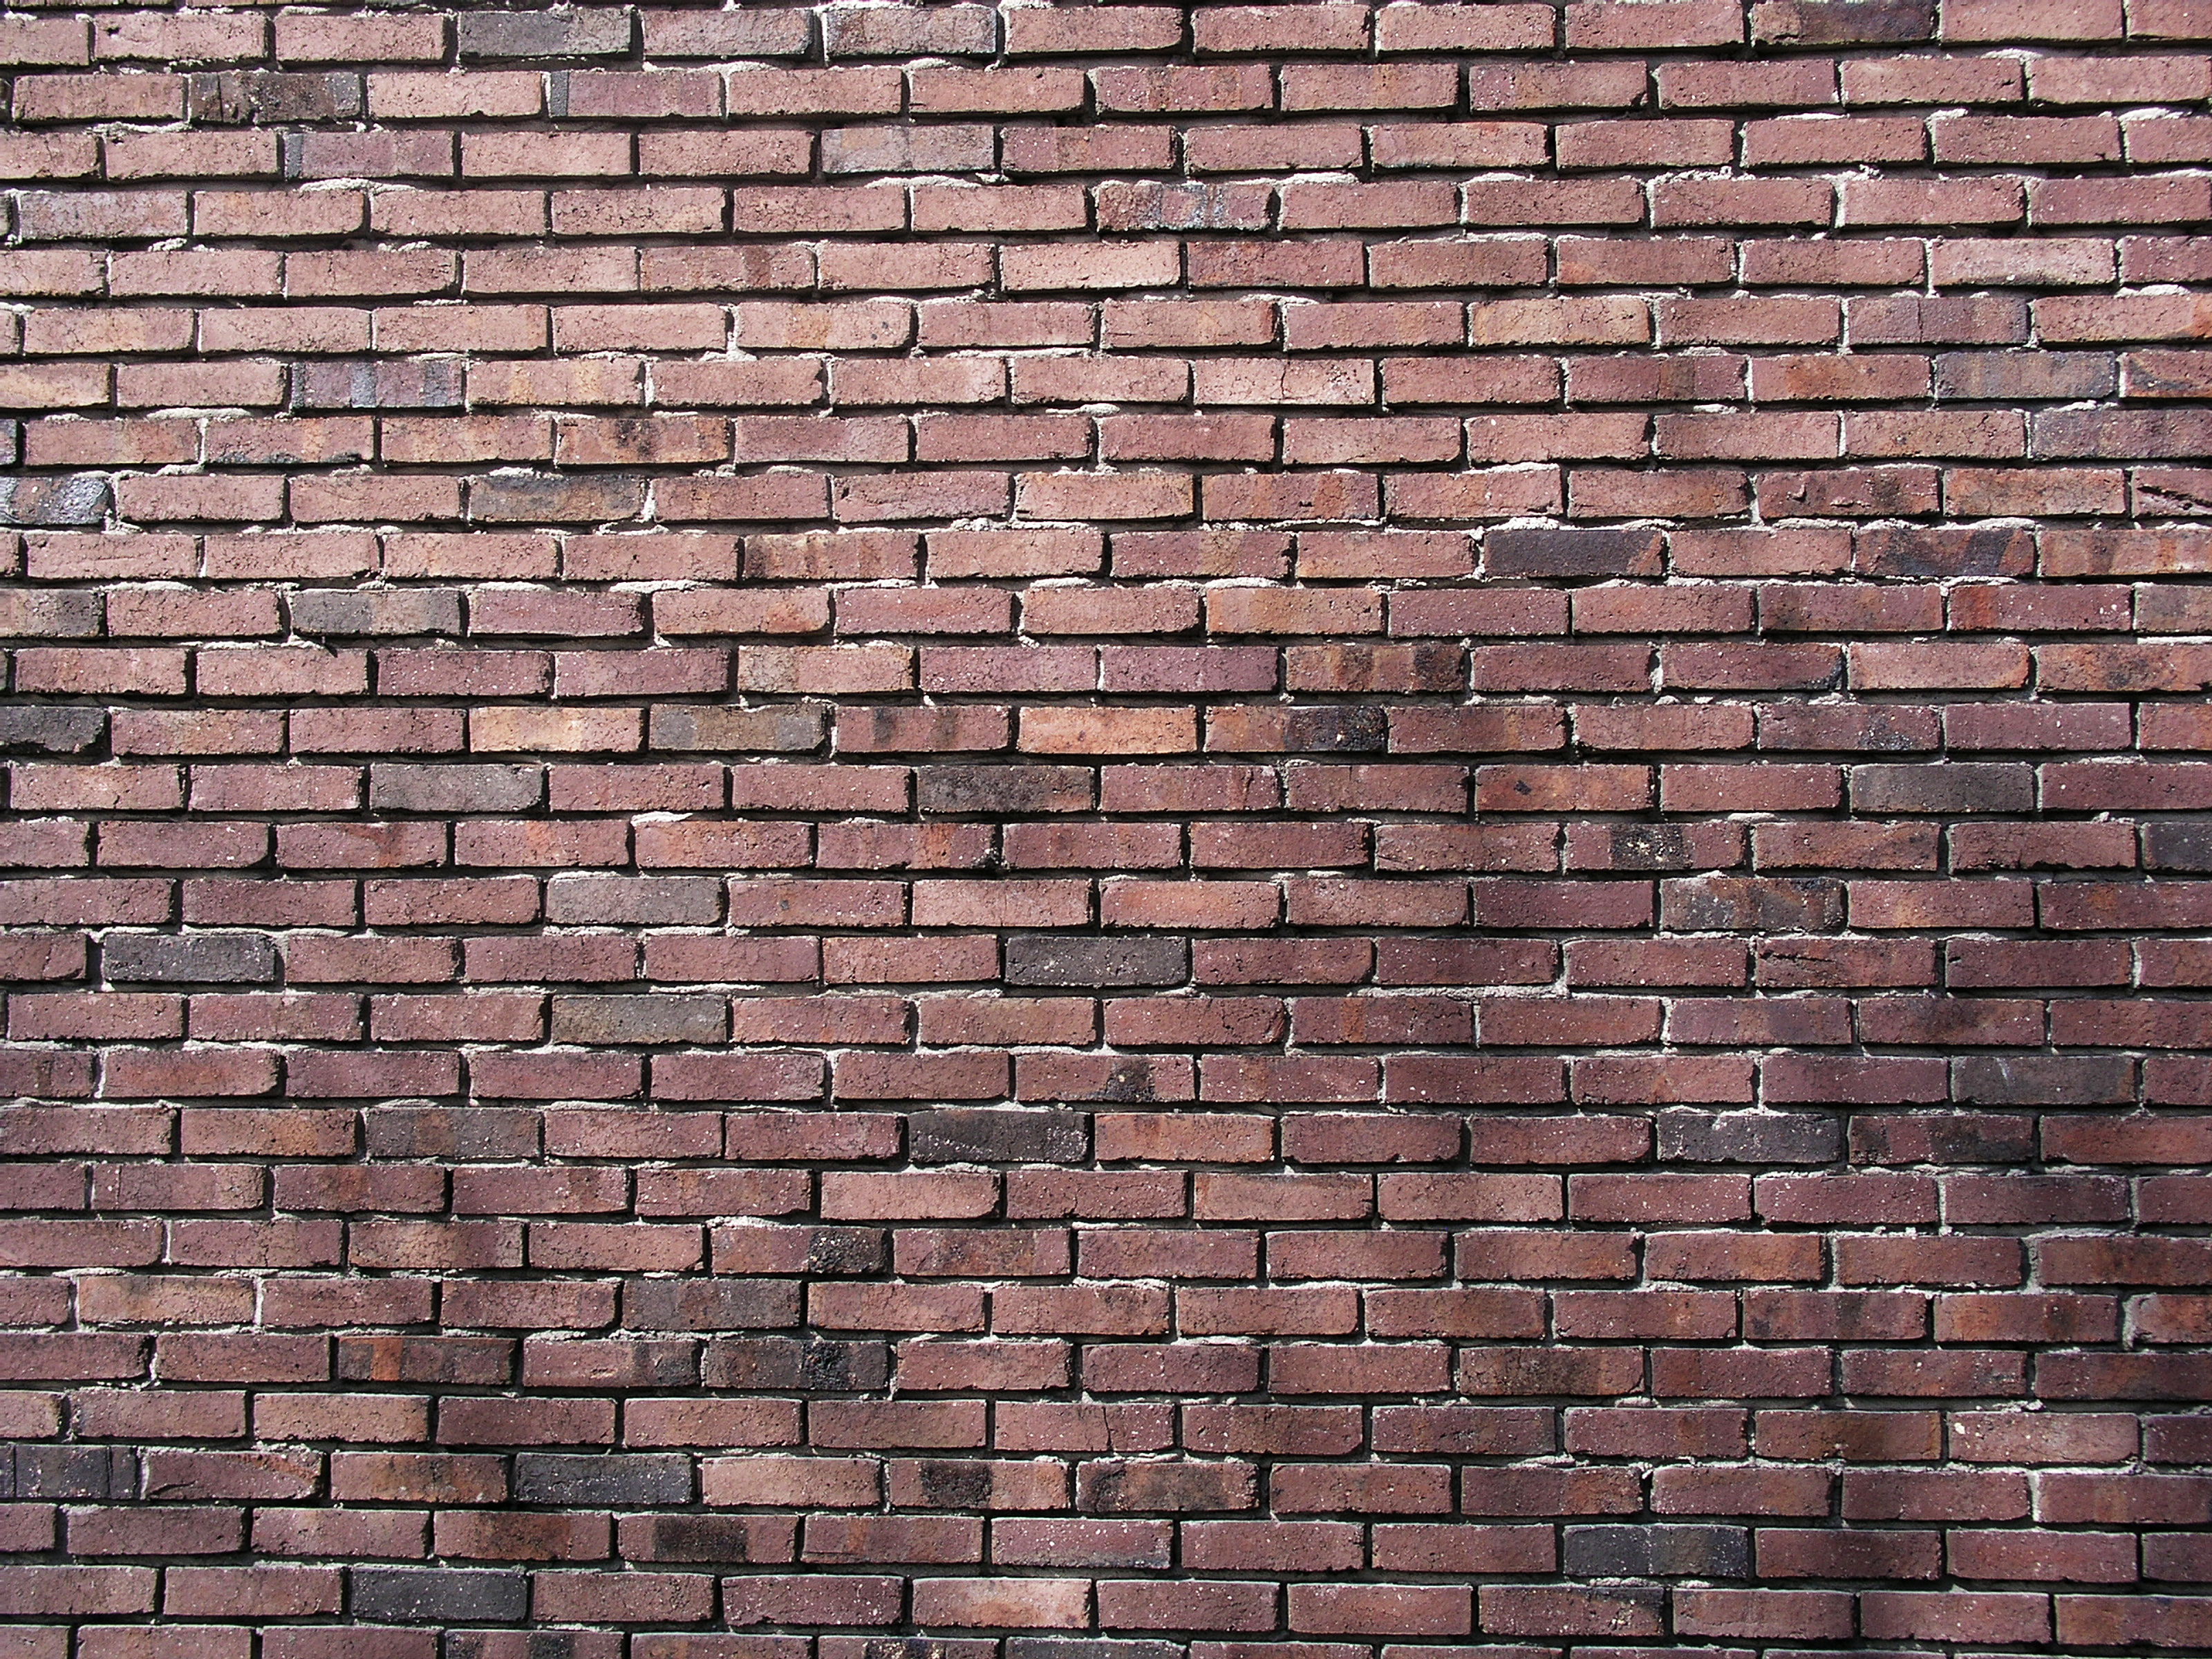 File:Soderledskyrkan brick wall.jpg - Wikimedia Commons